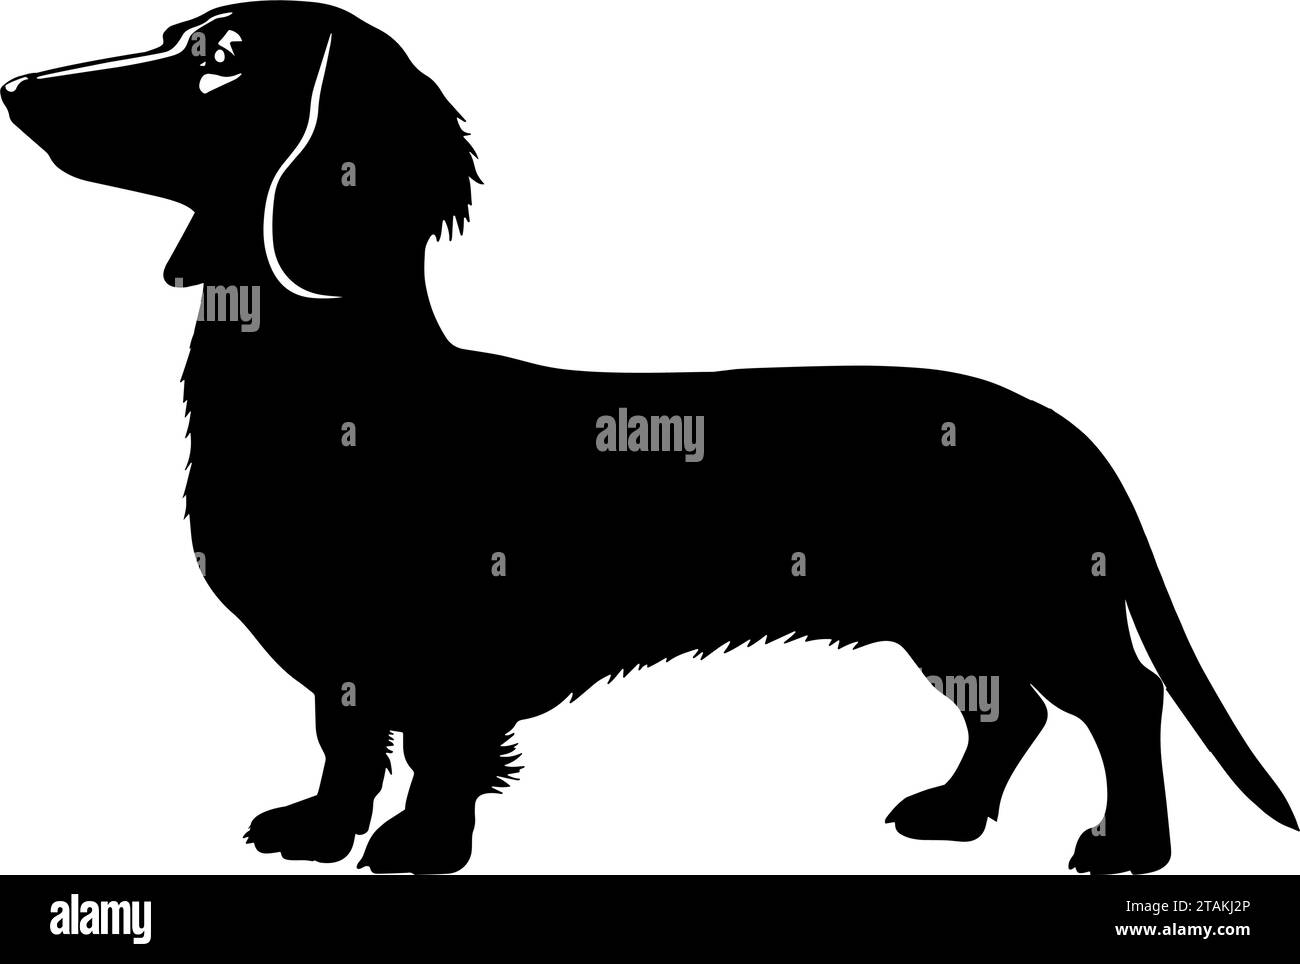 Dachshund Dog silhouette. Vector illustration Stock Vector